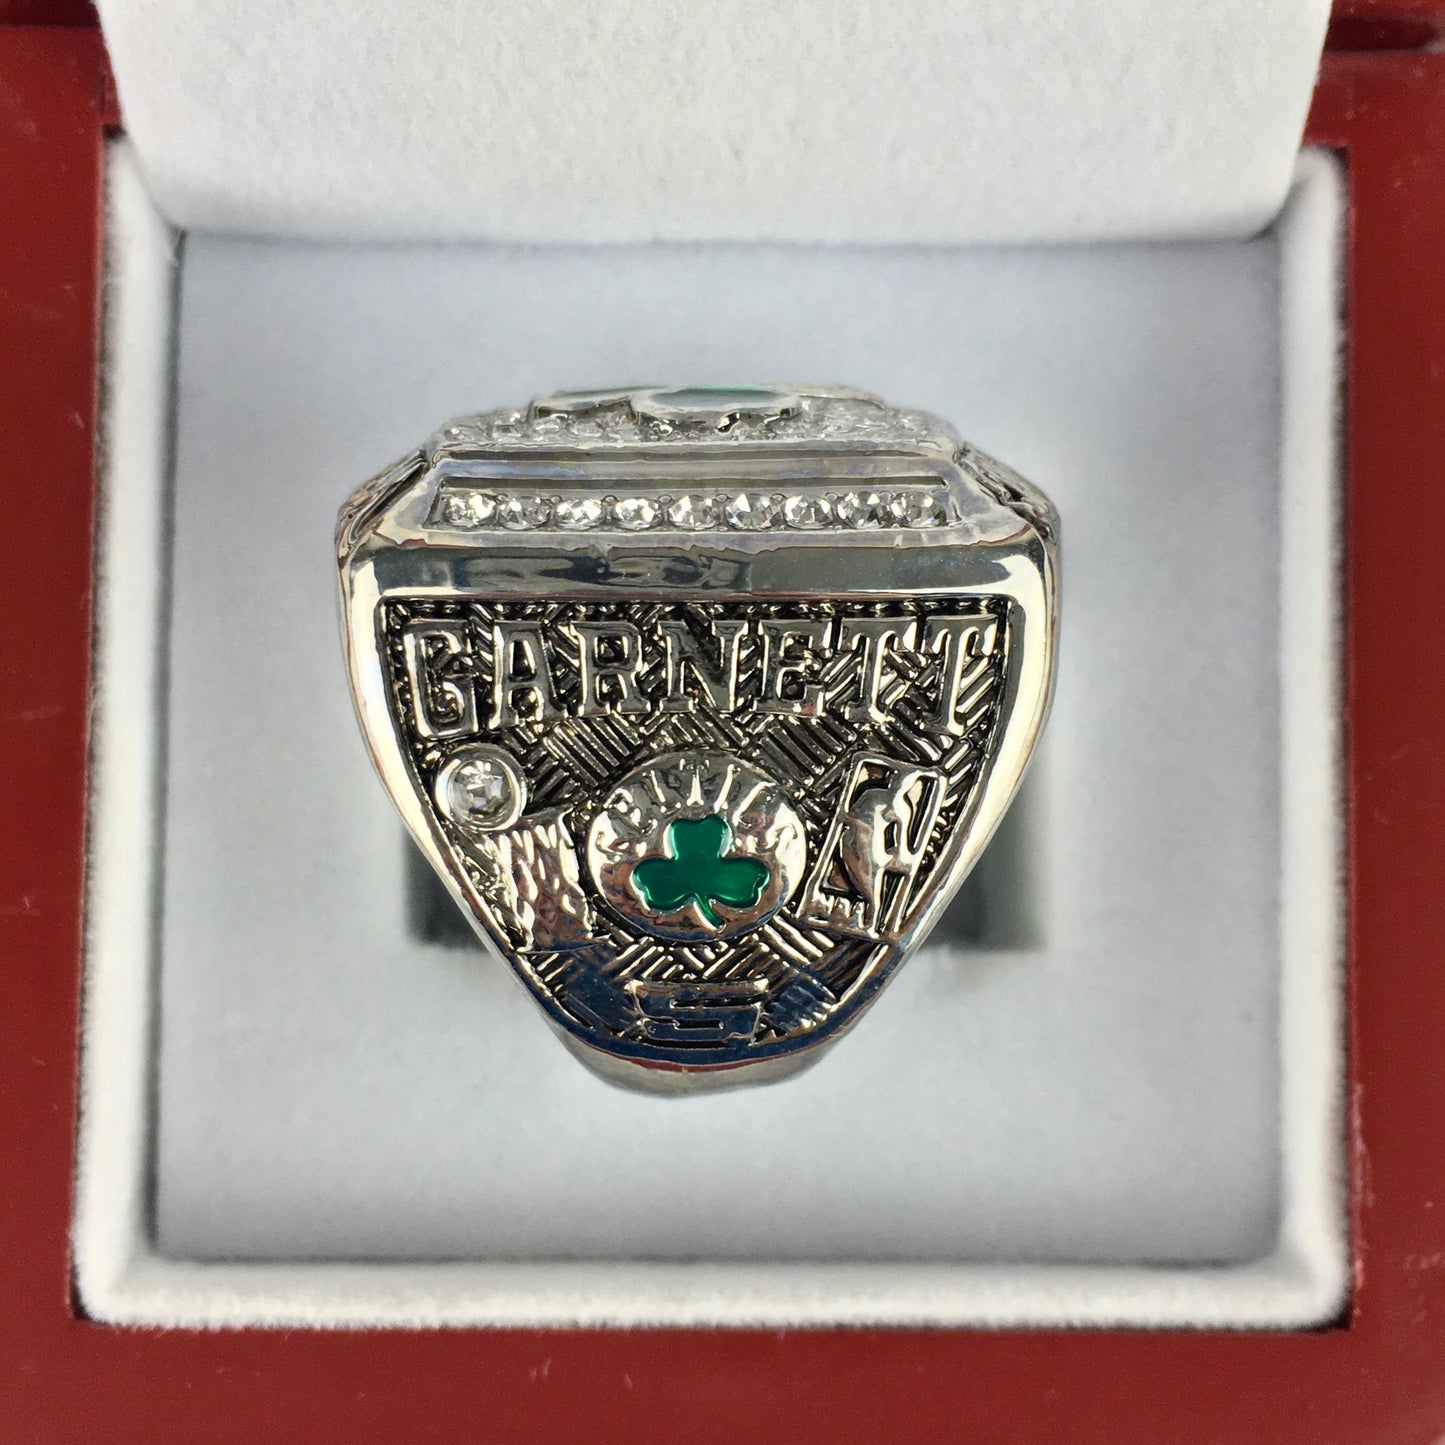 Boston Celtics Championship Ring 2008